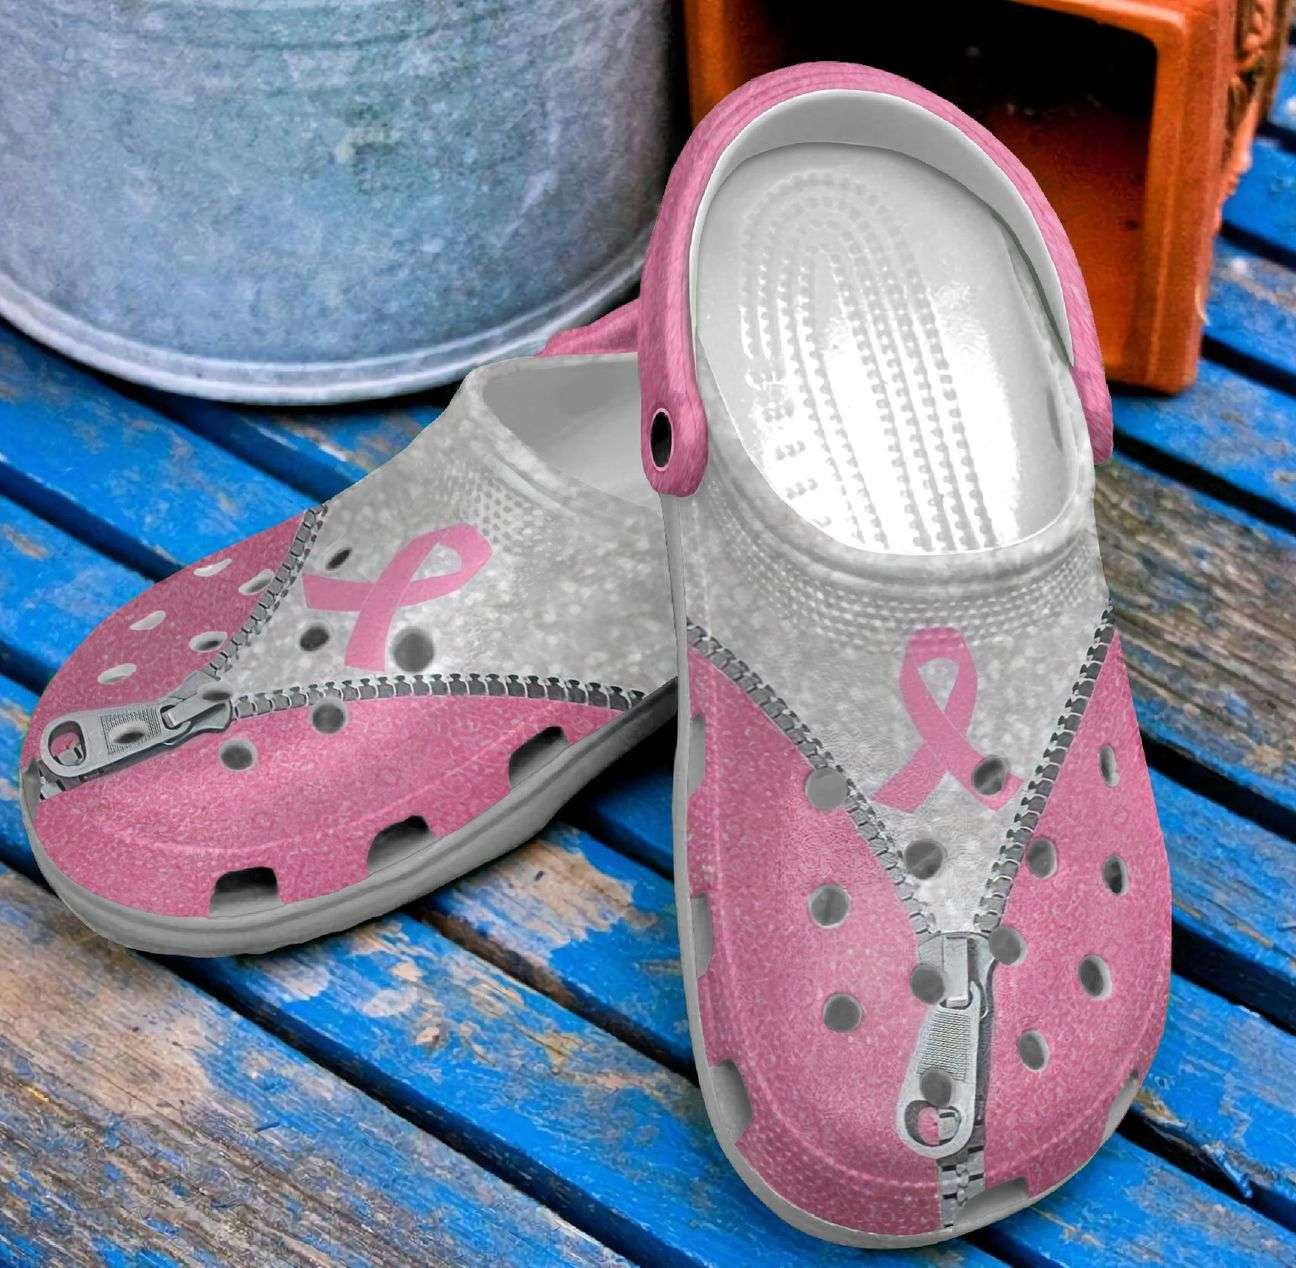 Breast Cancer Zip Line Crocs Crocband Clog Shoes